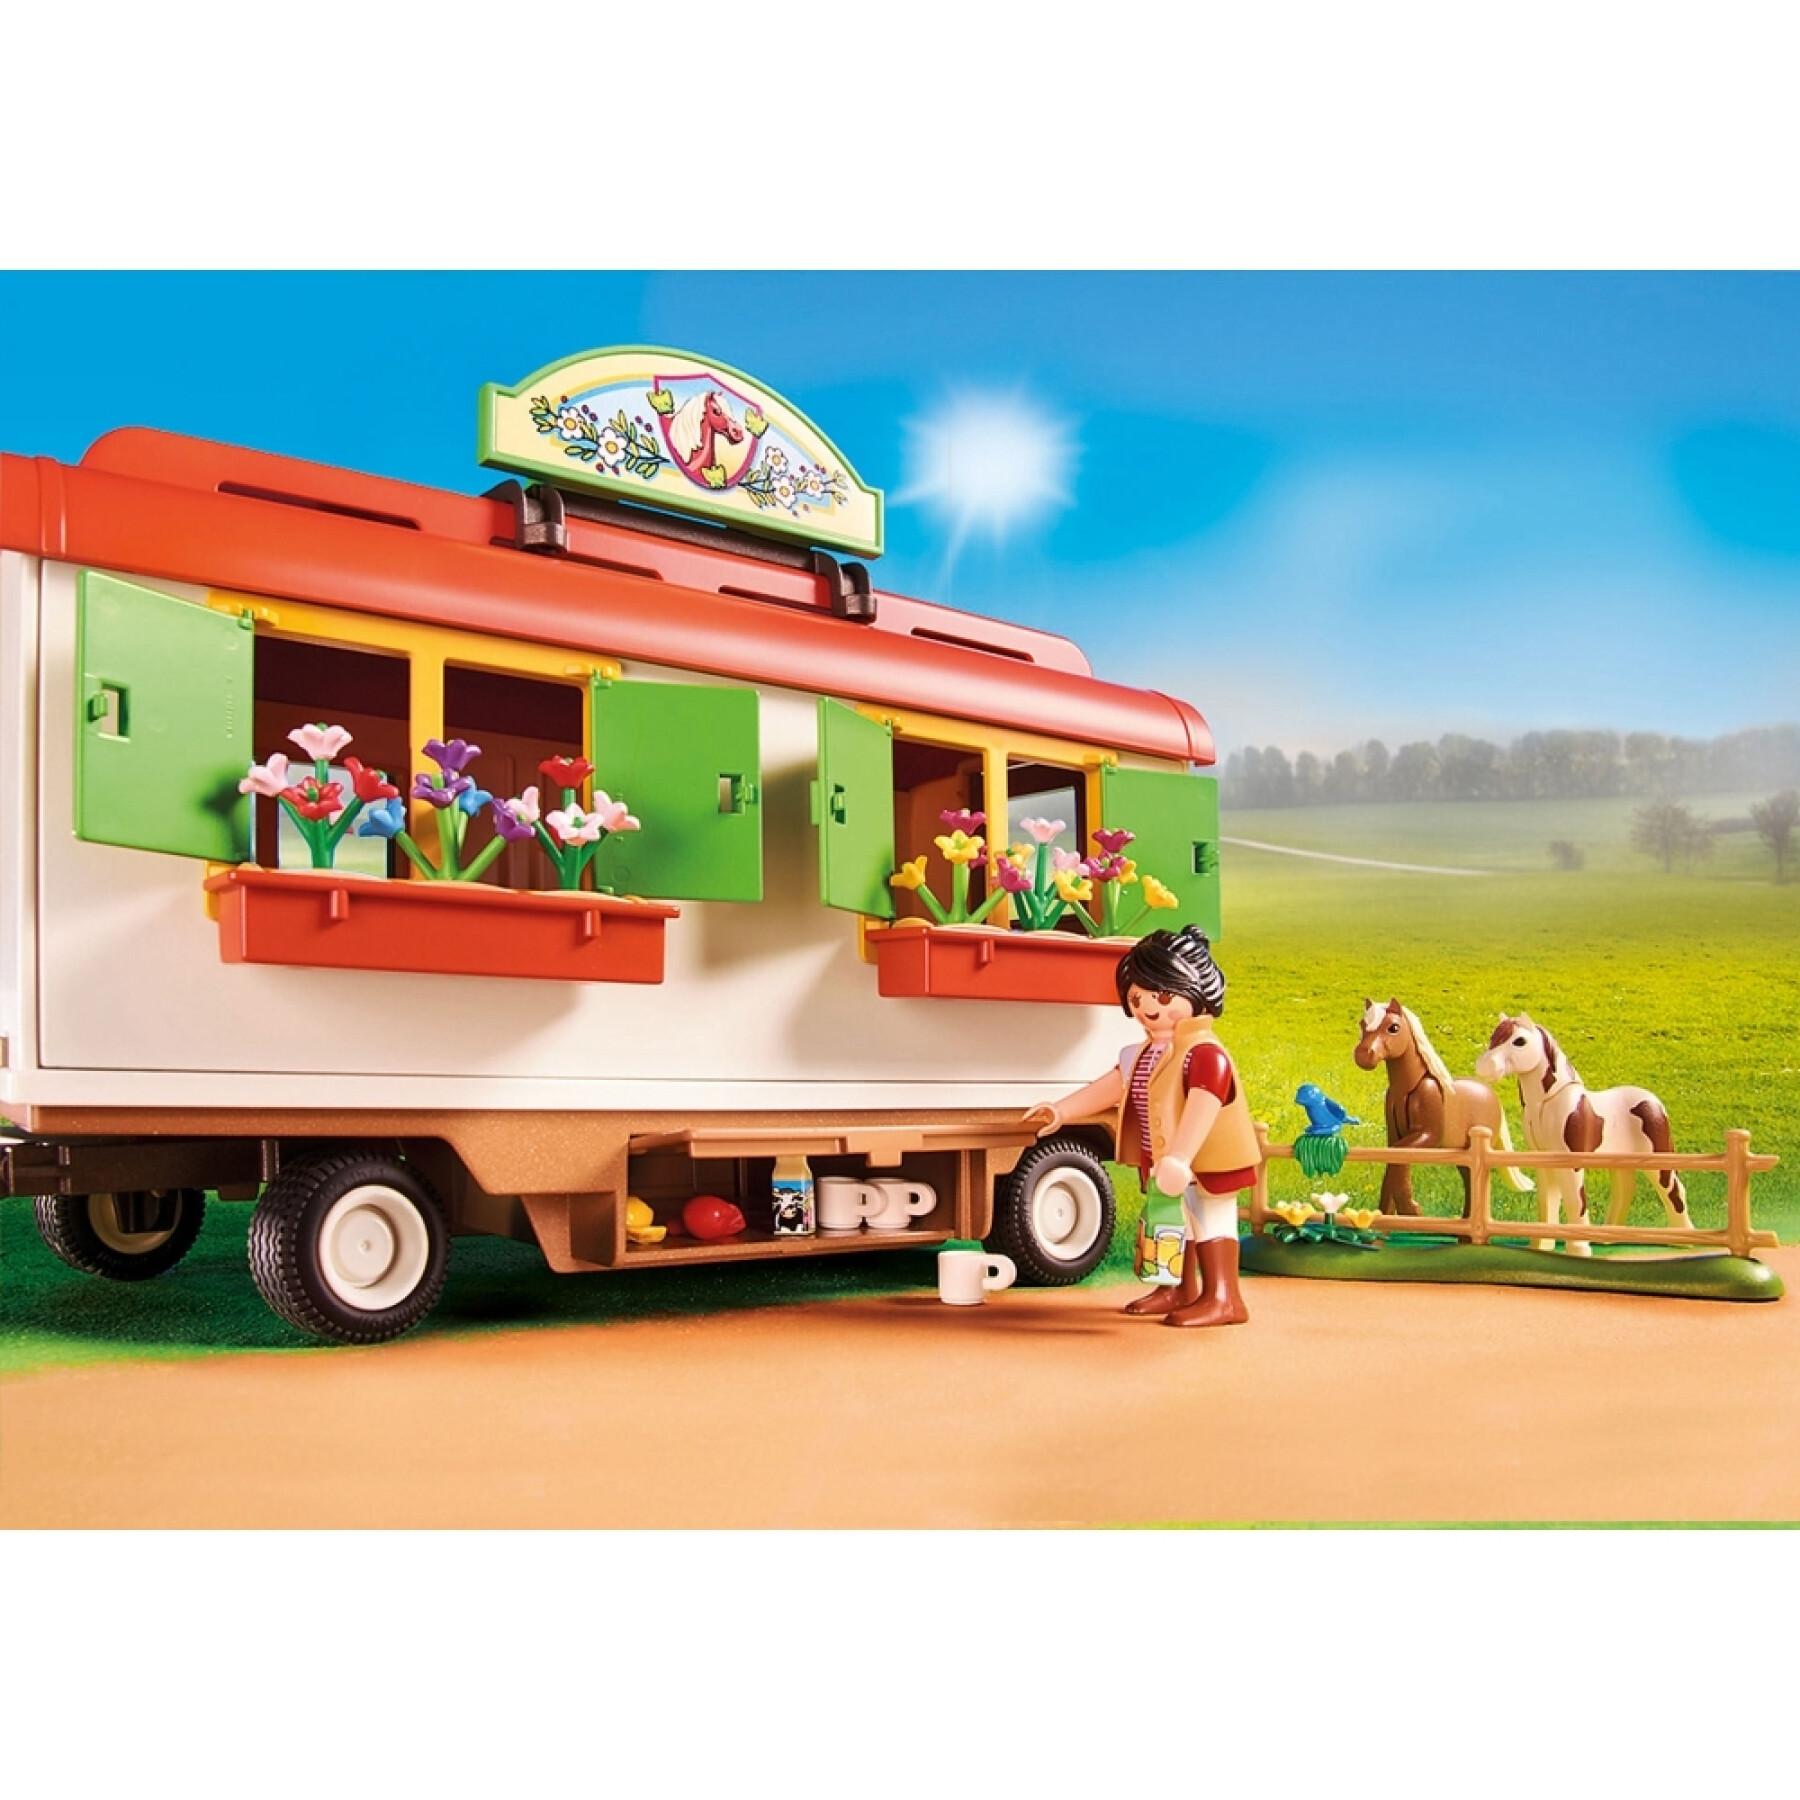 Pony caravan Playmobil Country